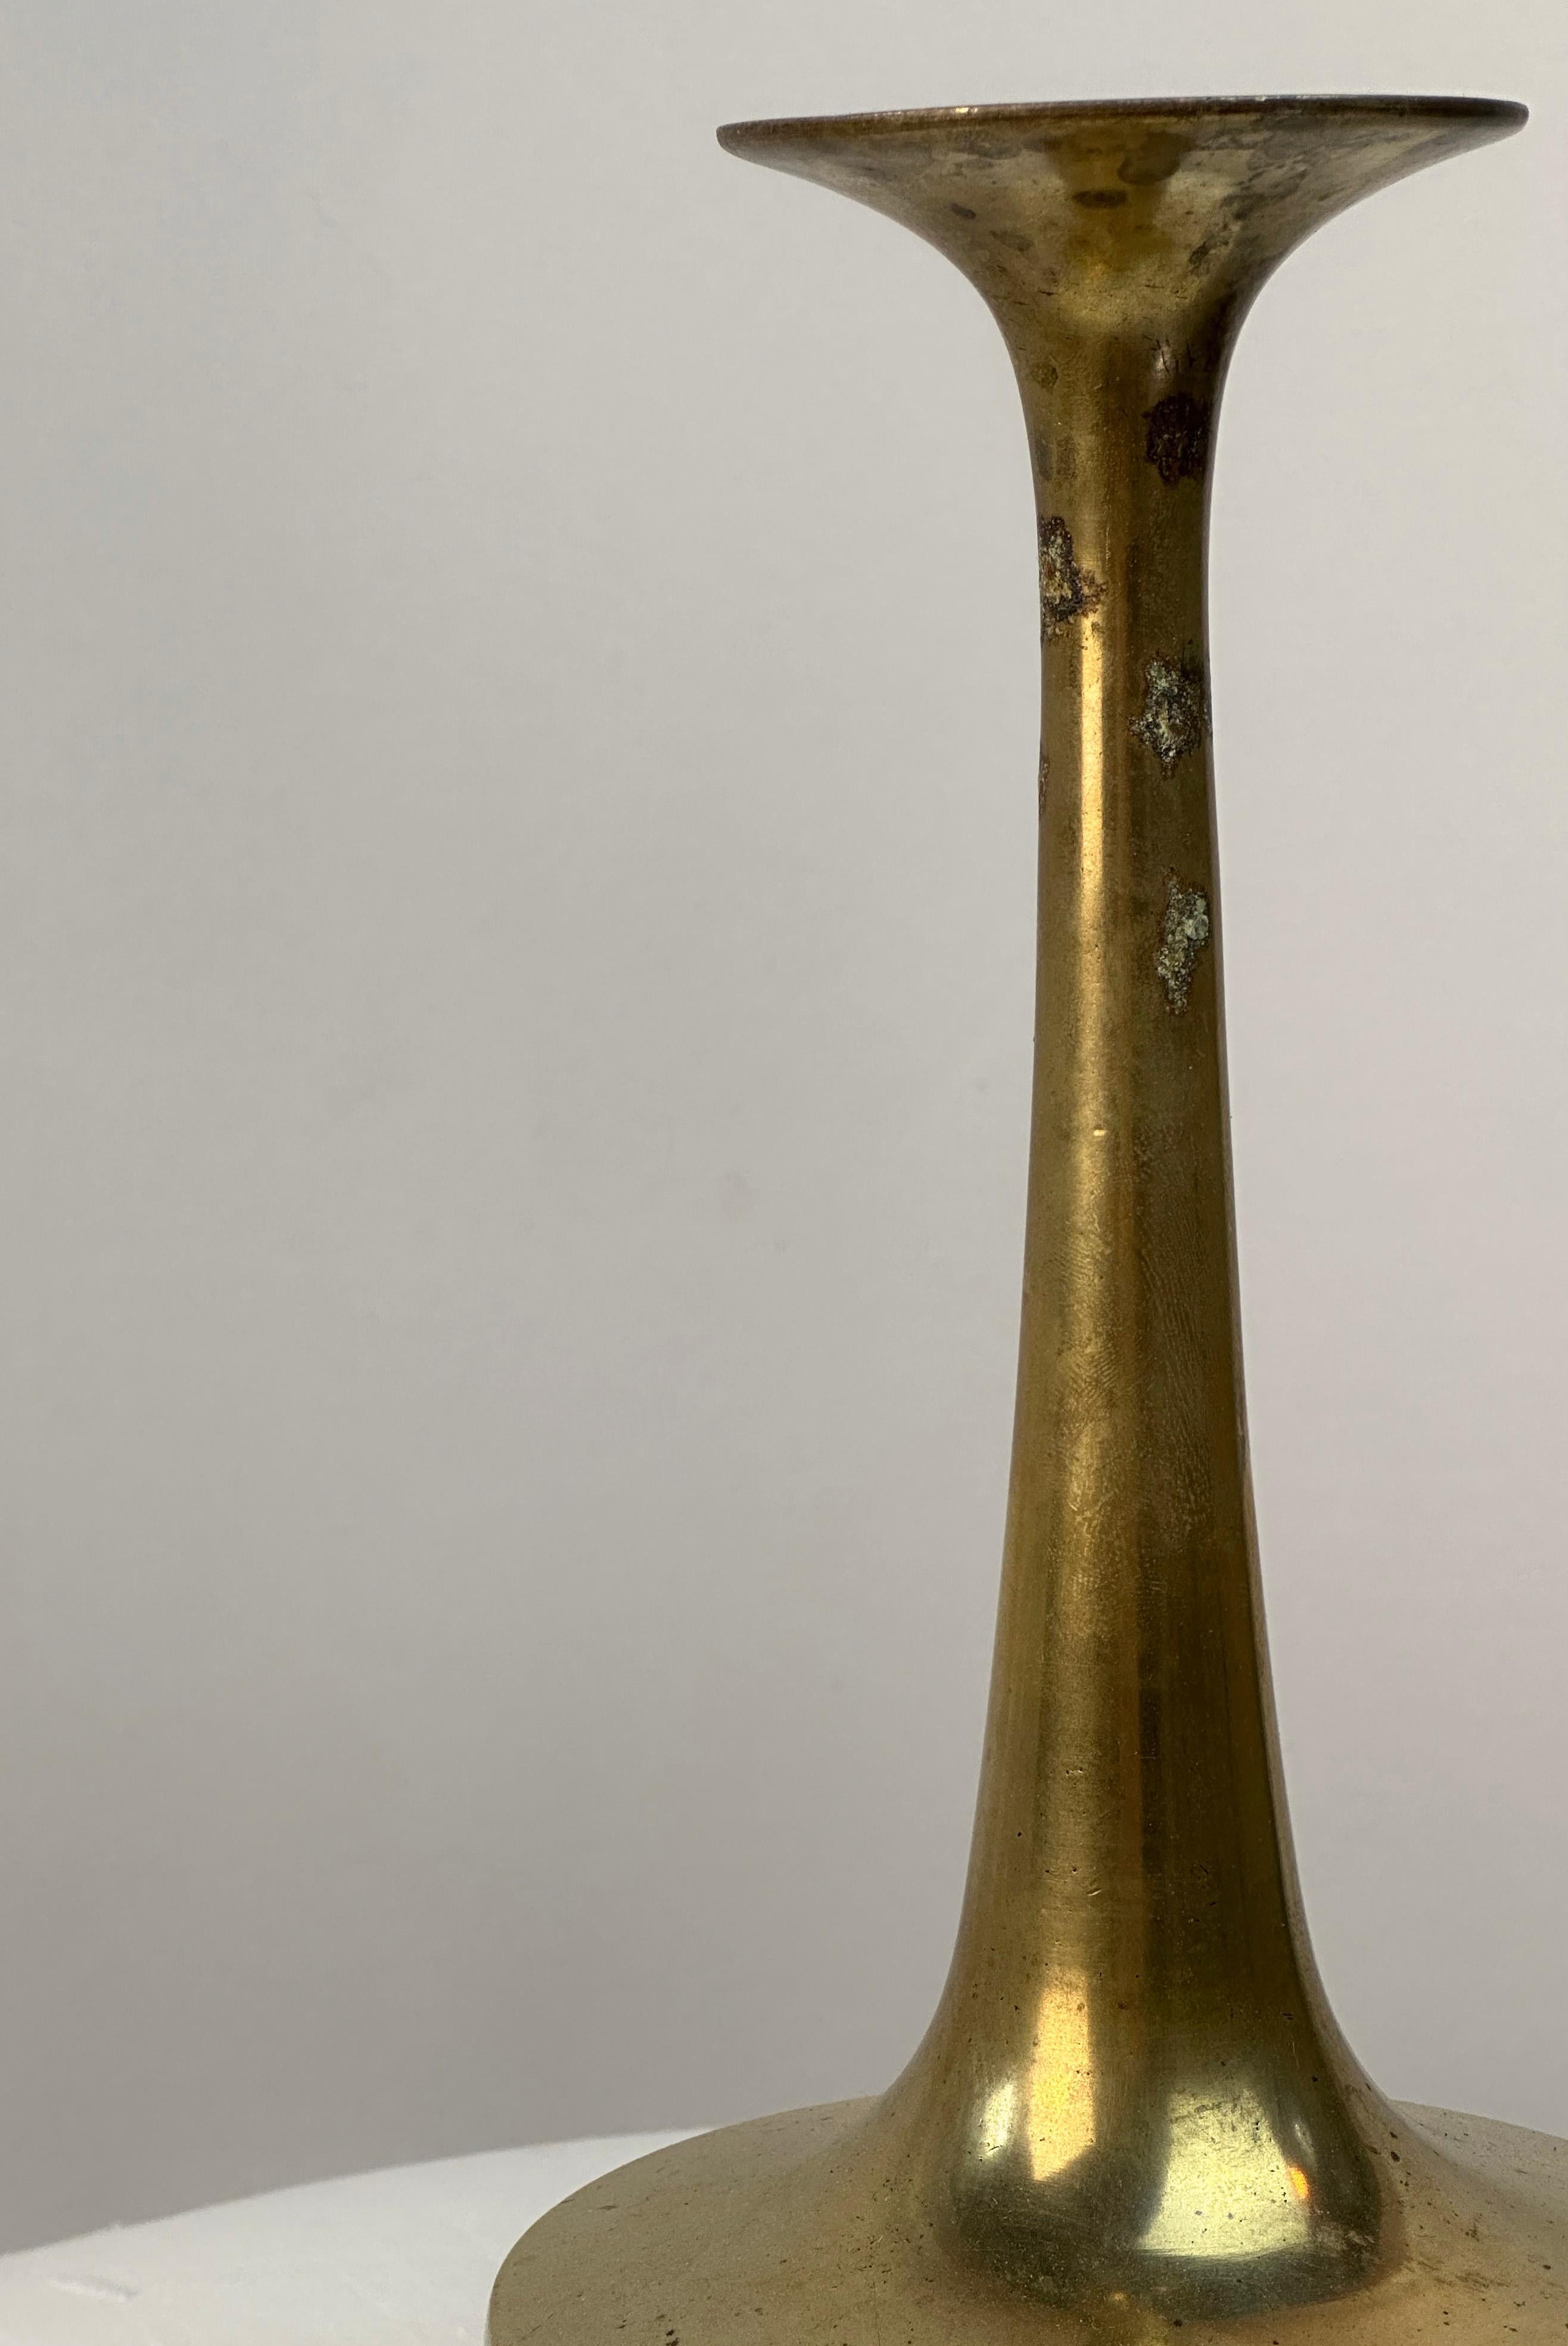 Early 20th Century Decorative Japanese Brass Bud Vase - Wabi Sabi - Patinated For Sale 2